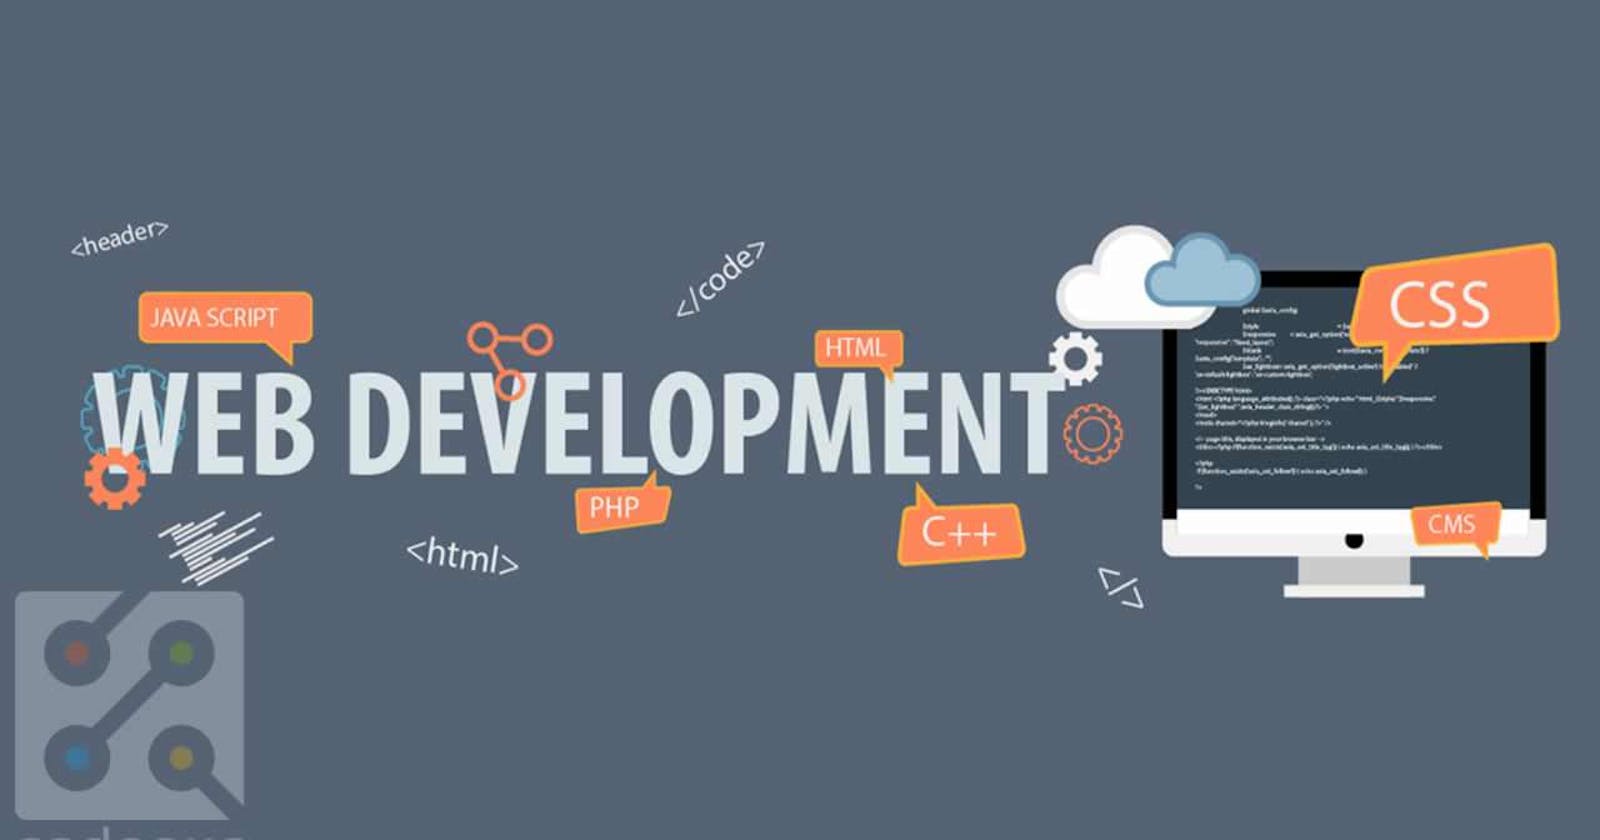 Web Development: A Guide for Beginners